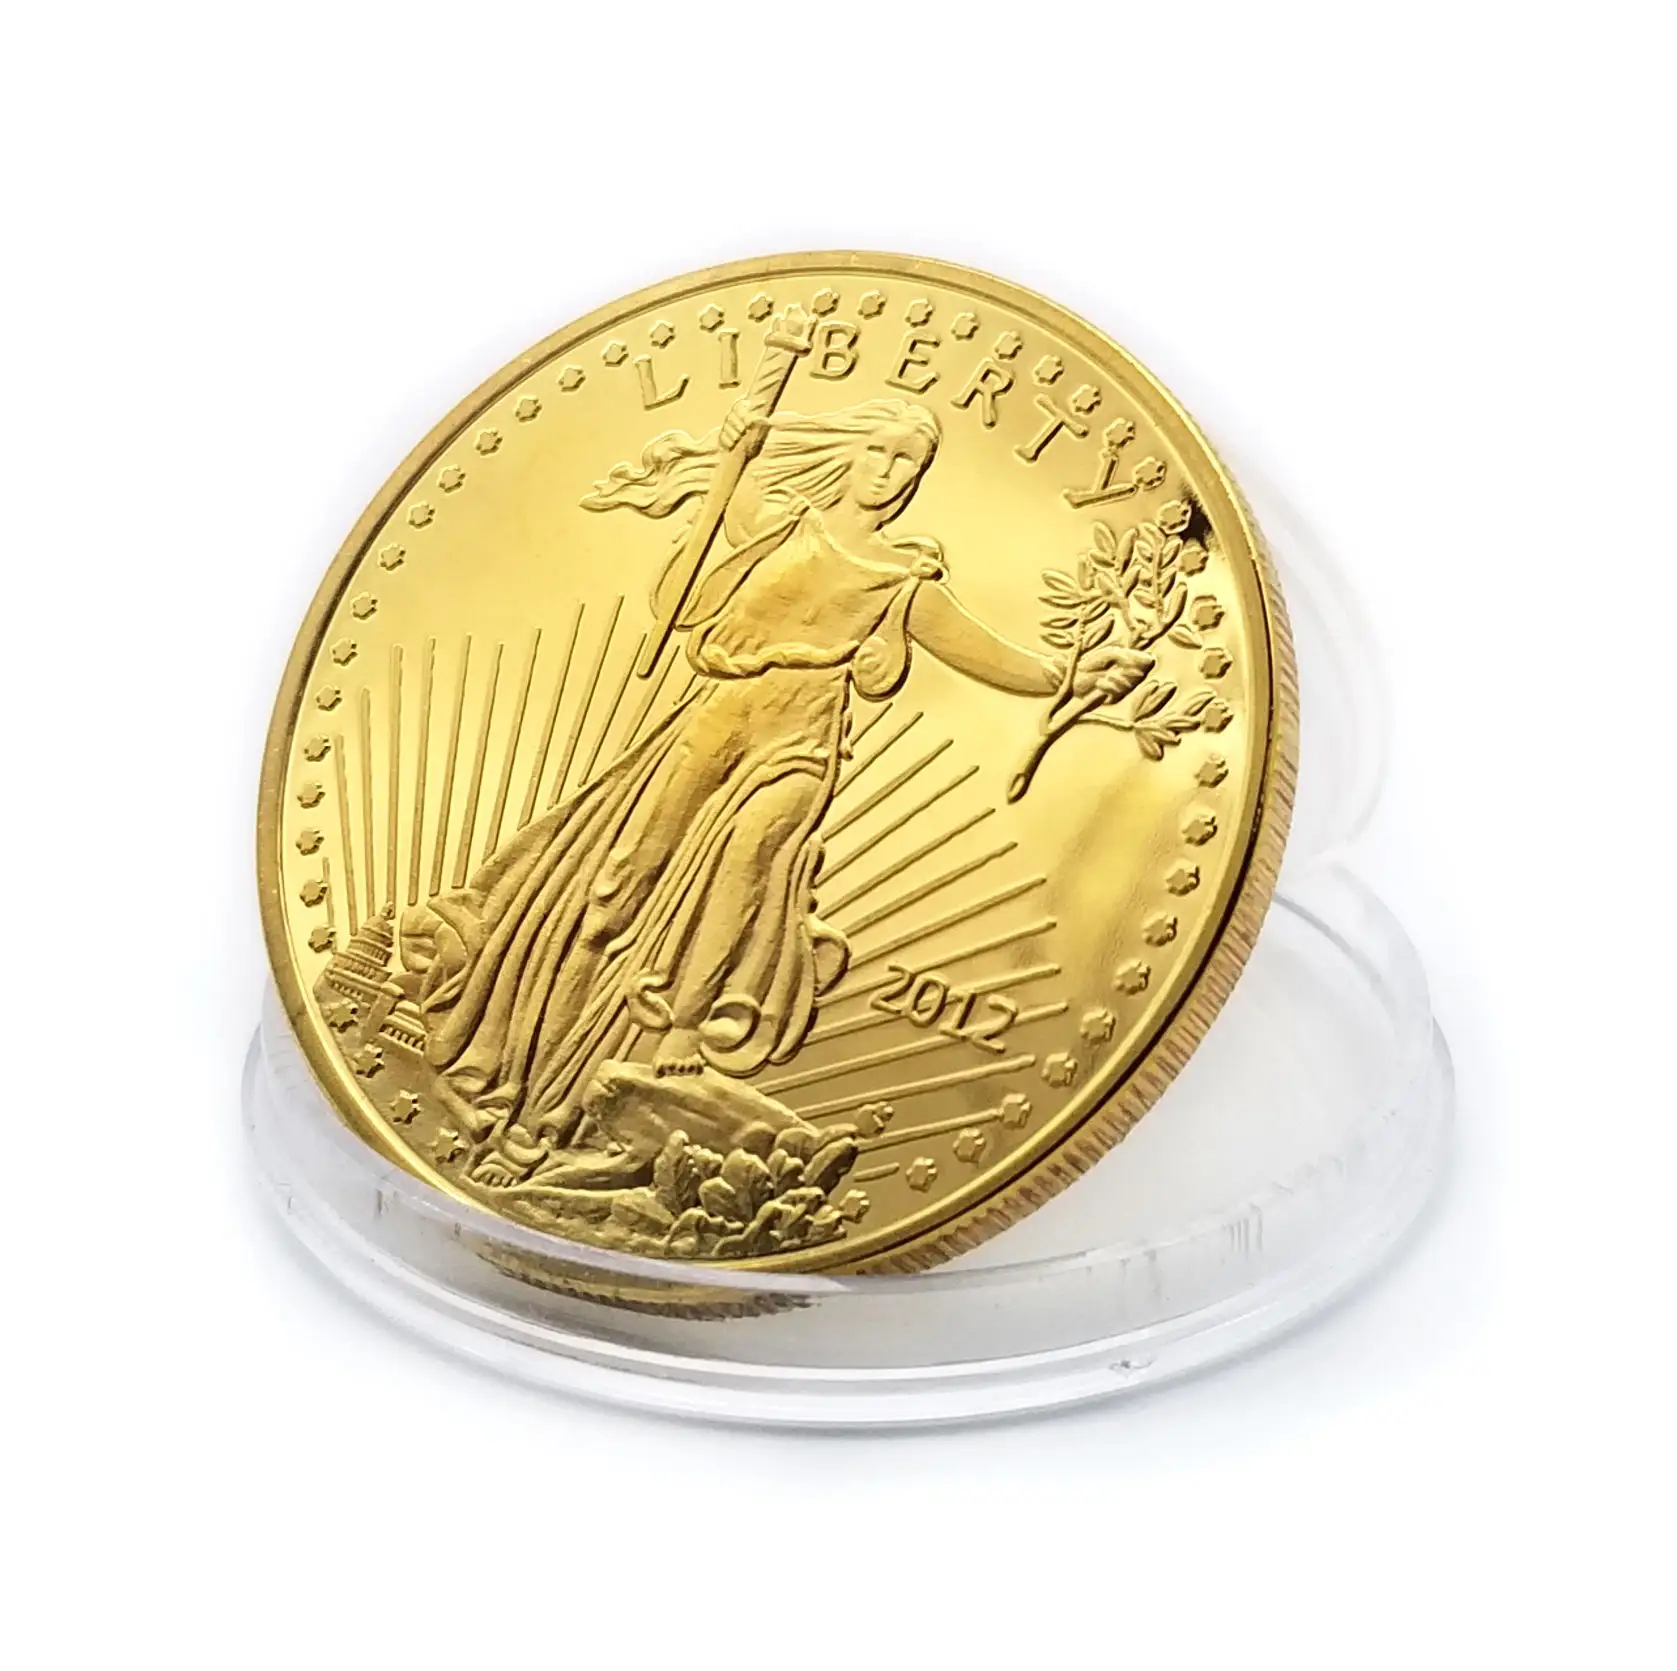 OEM רבע נשר 1 אונקיות זהב העתק הנצחה מטבע טונגסטן אמריקאי זהב כסף כפול נשר ארה""ב מטבע